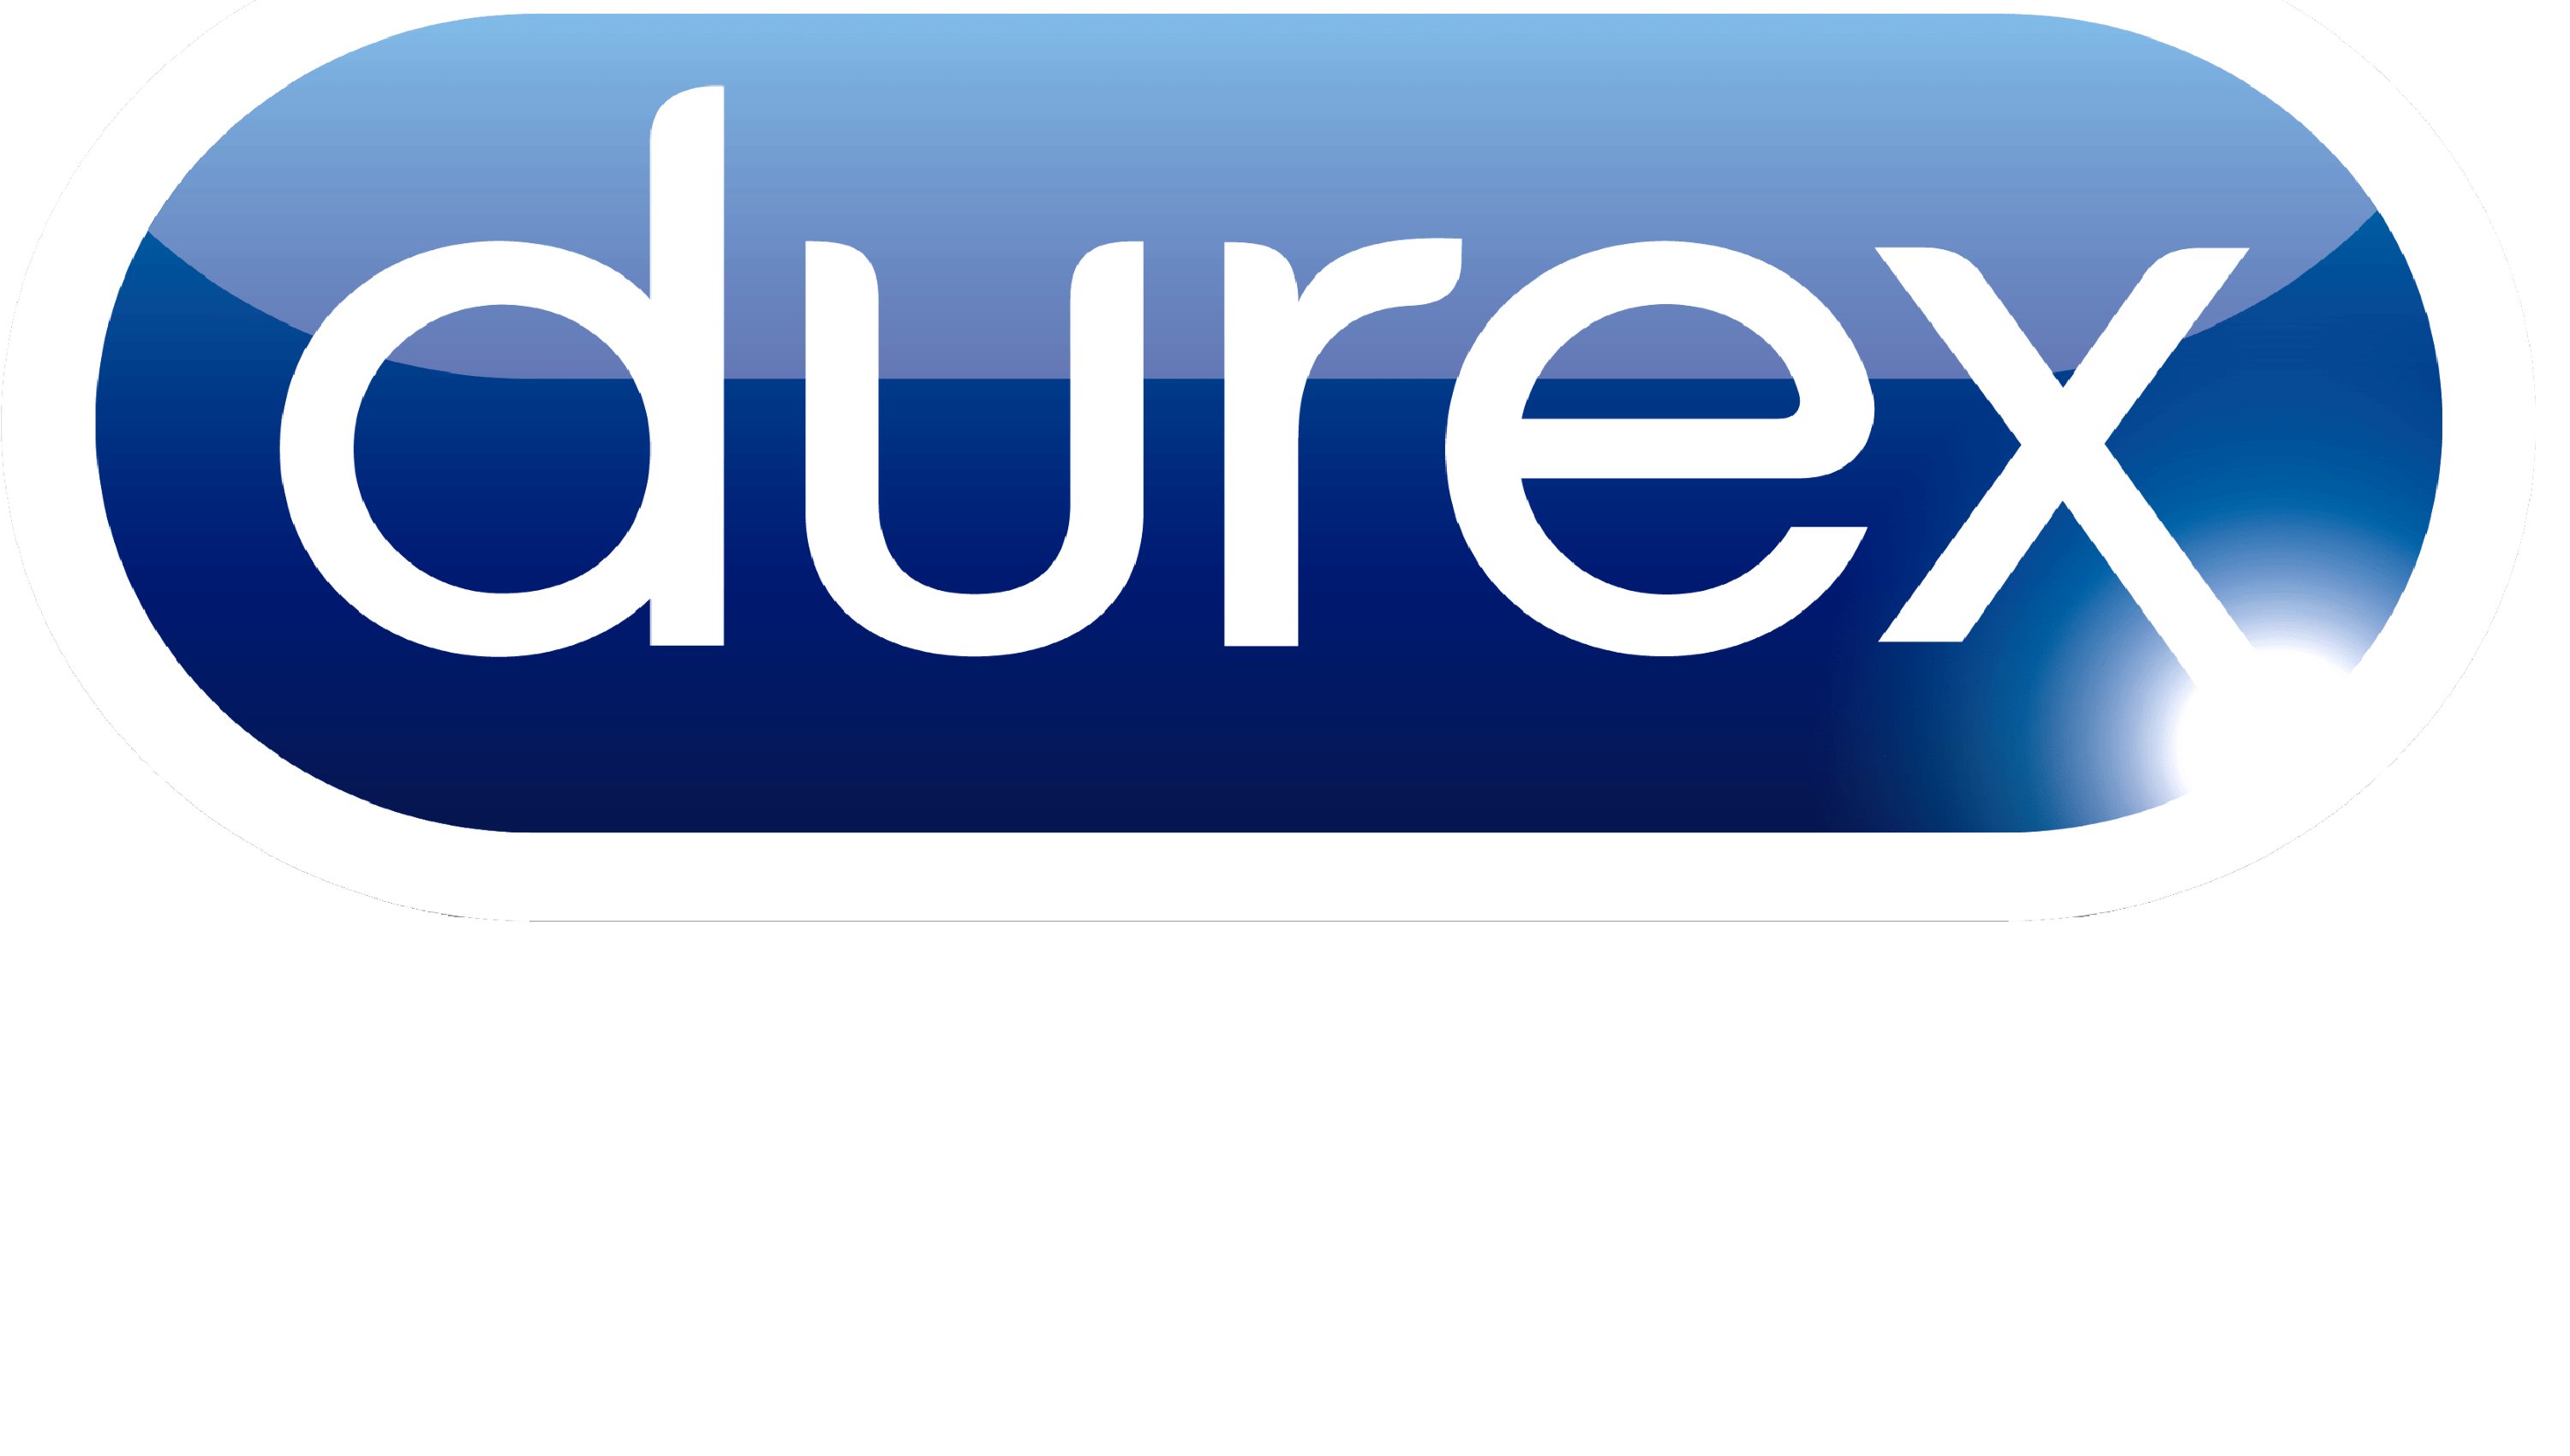 Durex Pictures | Download Free Images on Unsplash